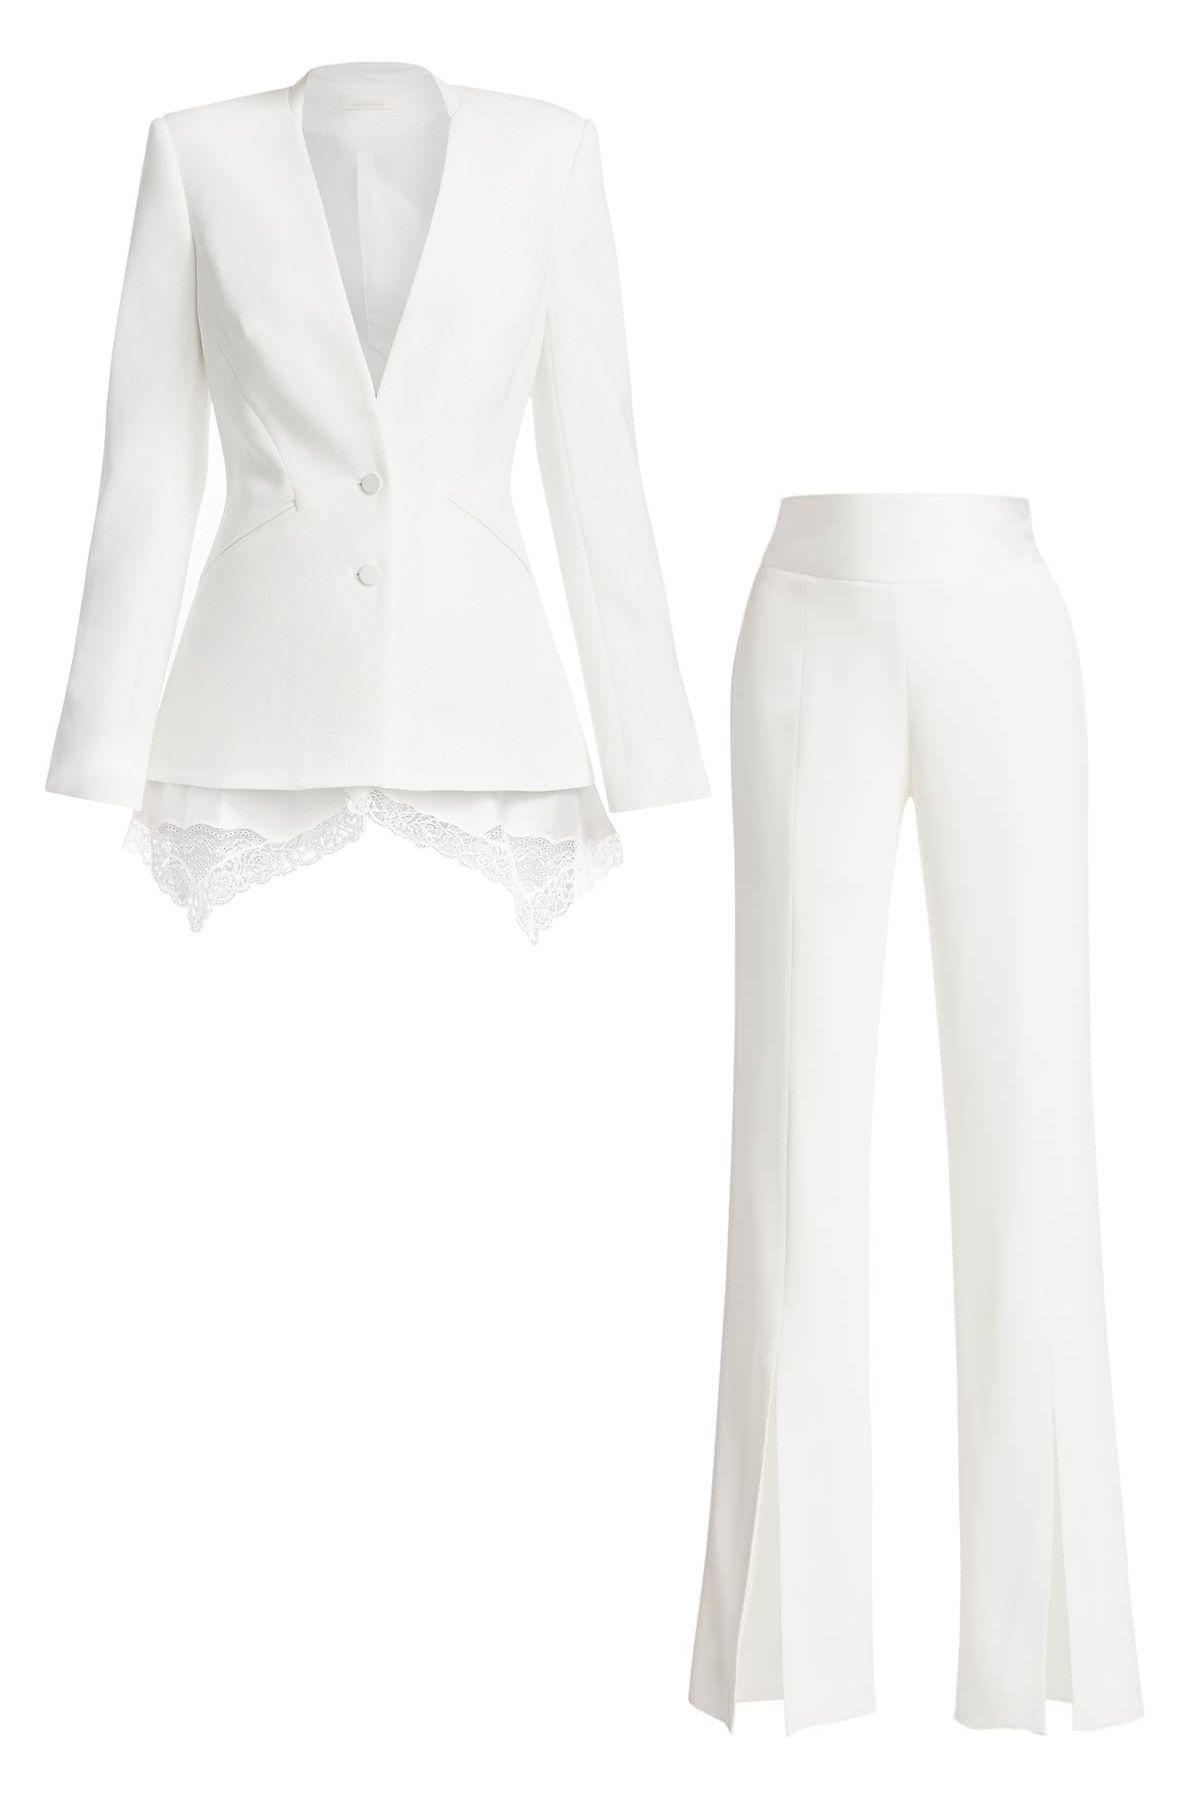 ladies cream trouser suits for weddings